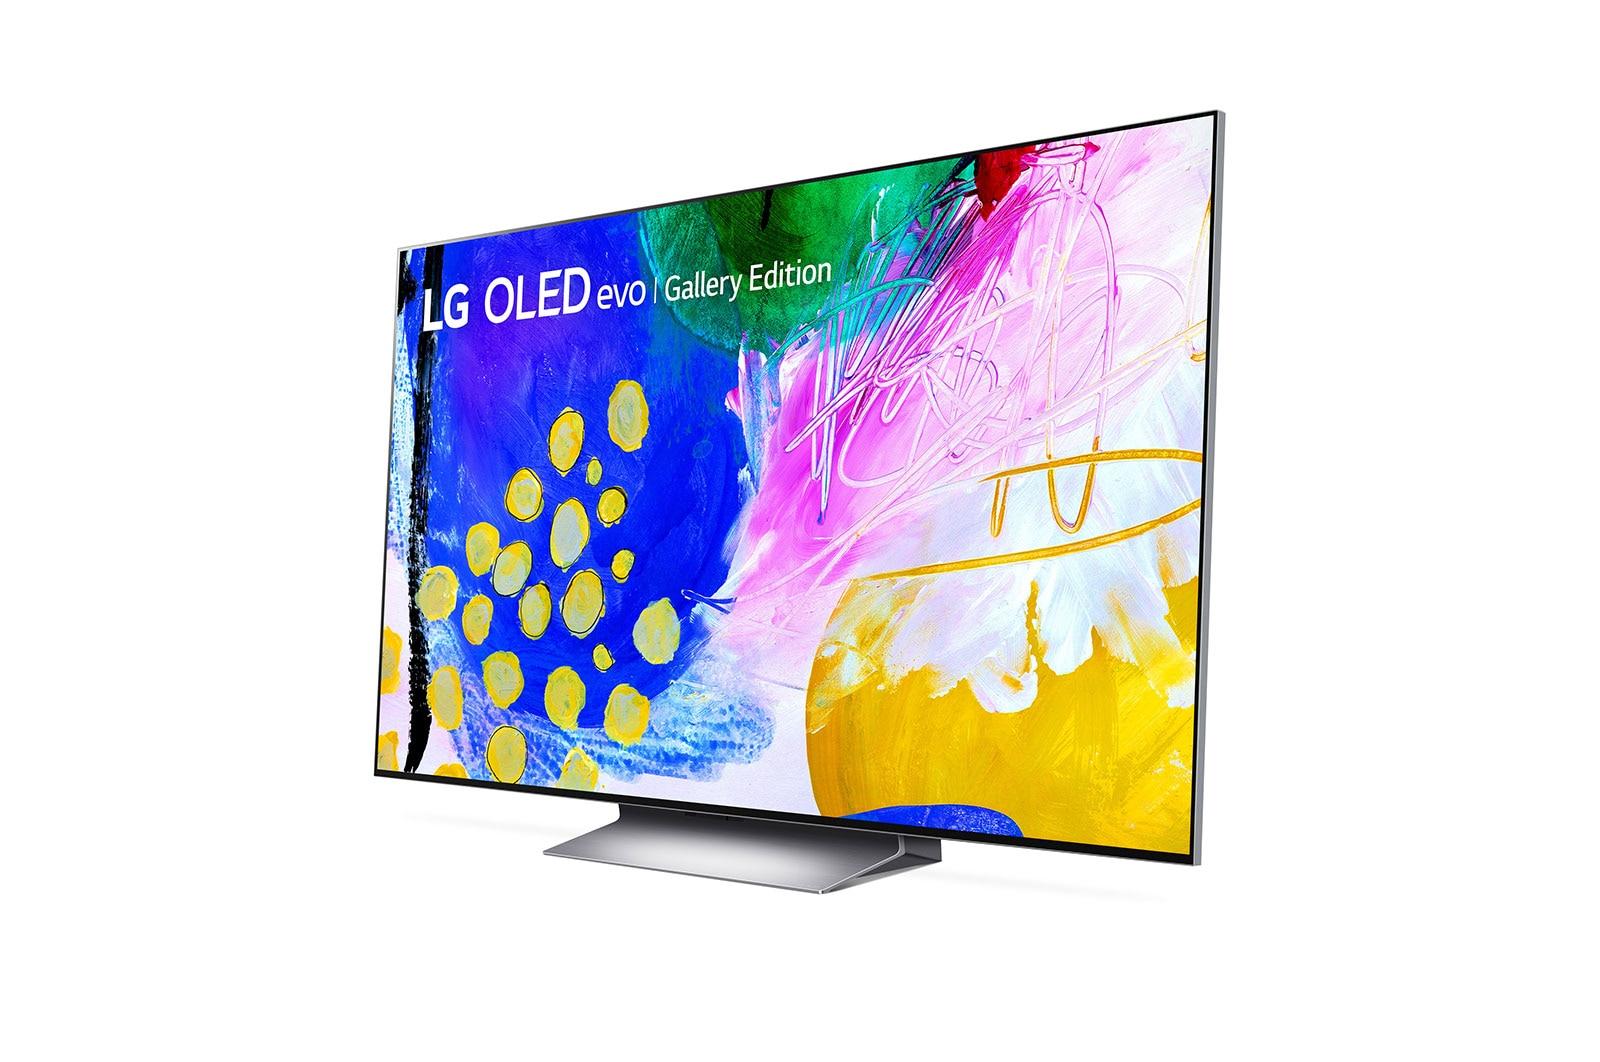 LG G2 55-inch OLED evo Gallery Edition TV